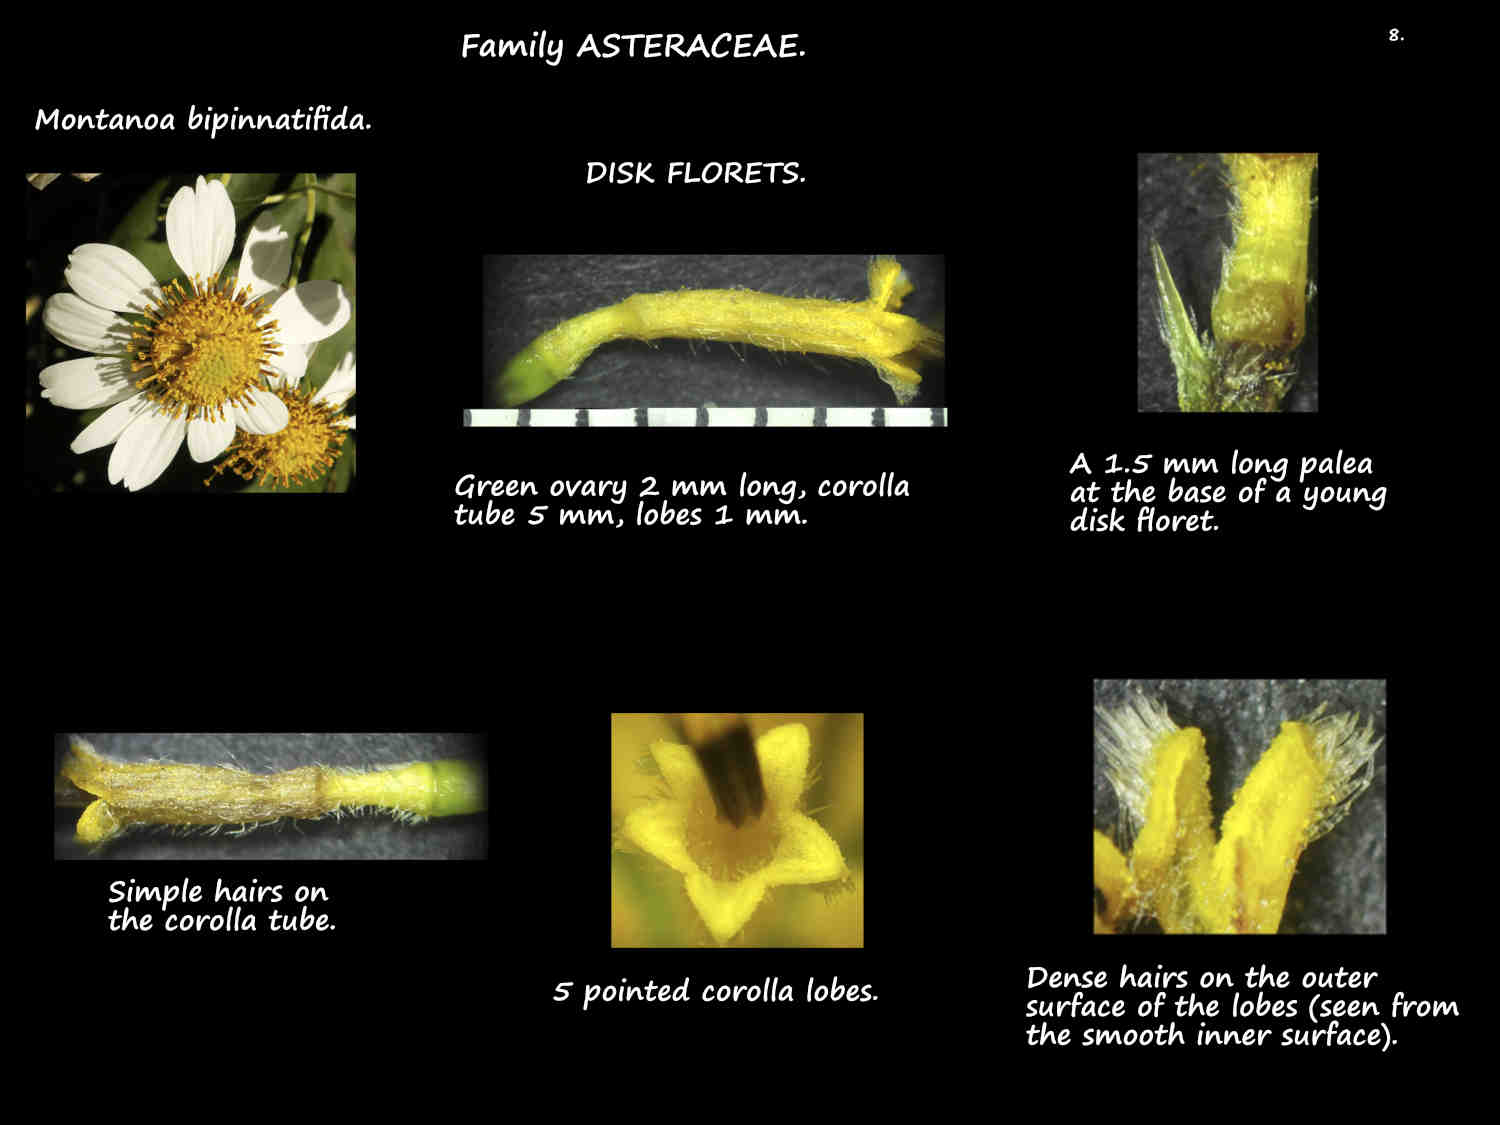 8 Corolla of Montanoa bipinnatifida disk florets